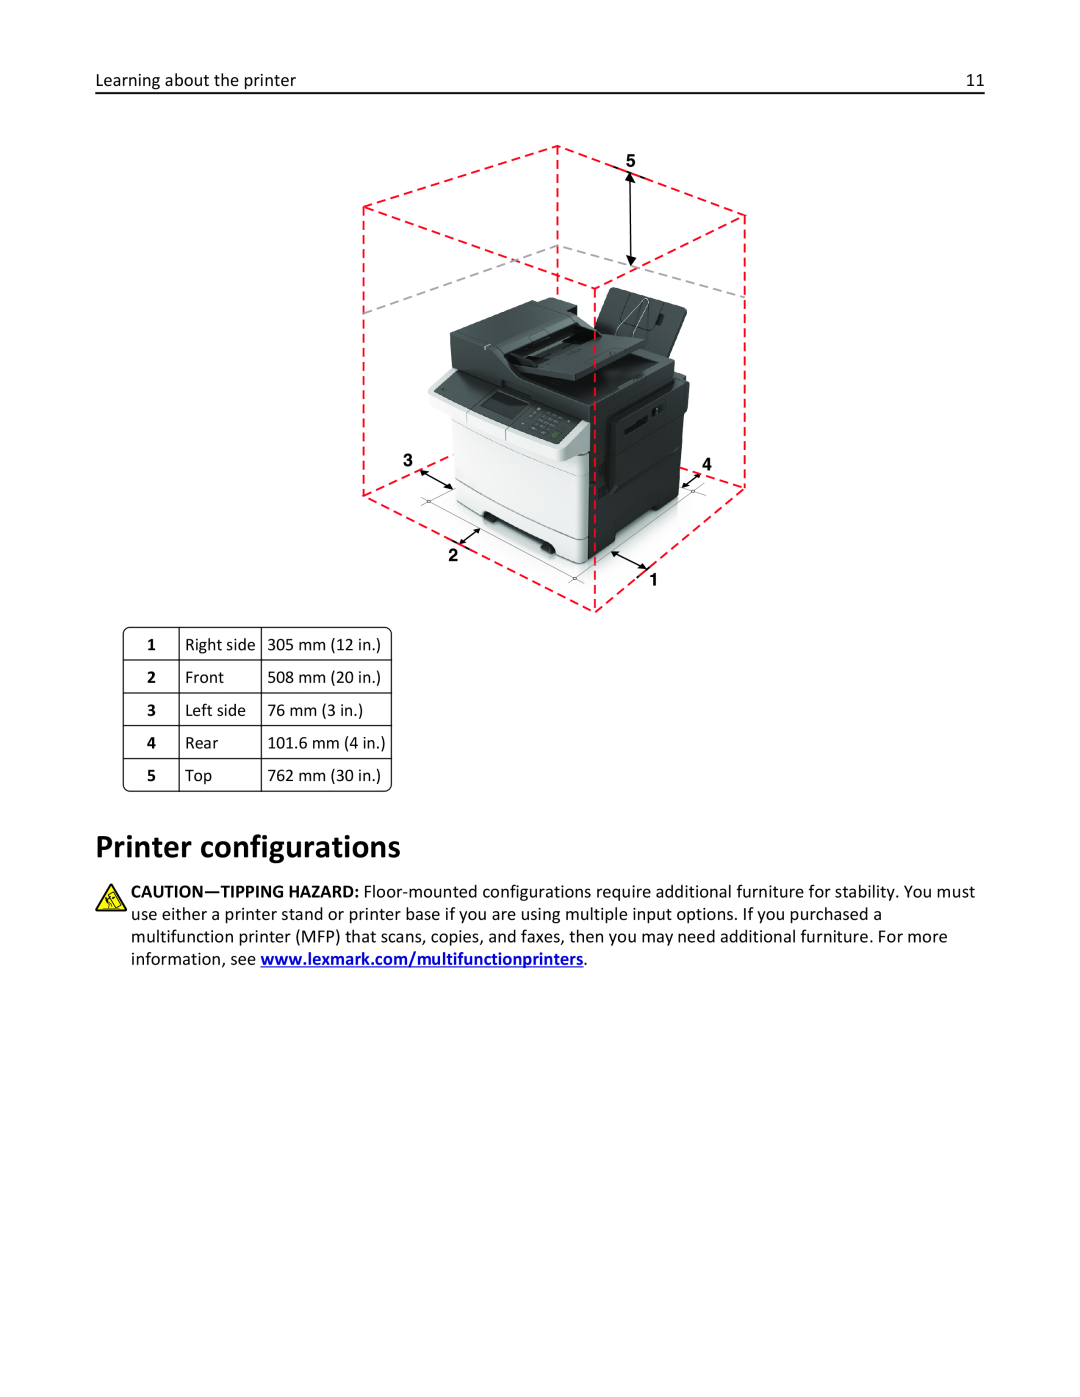 Lexmark 436 manual Printer configurations 